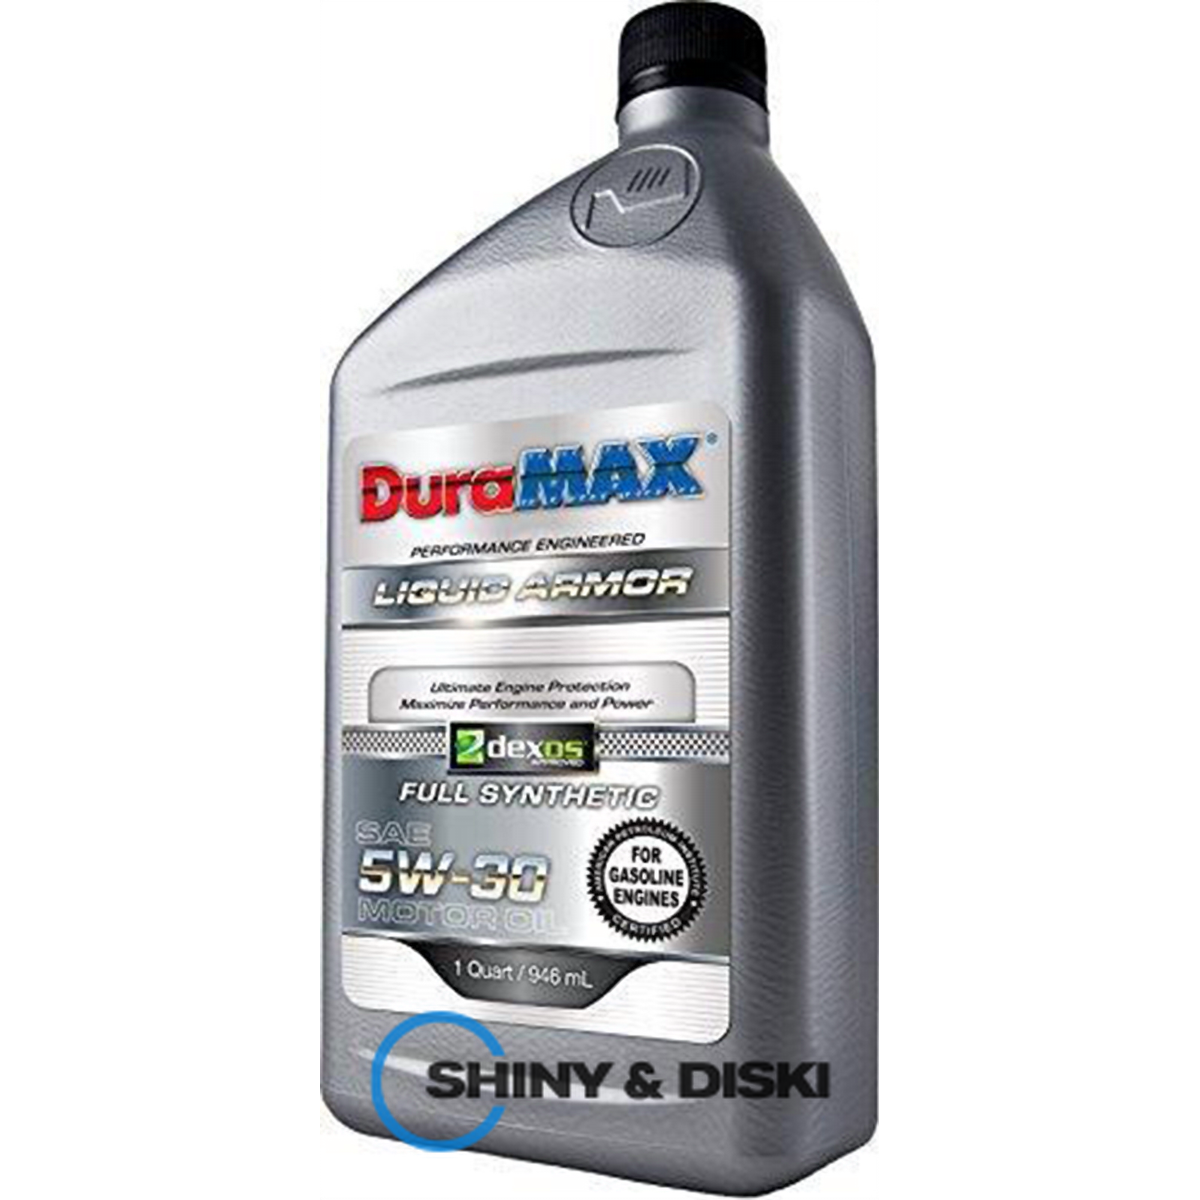 duramax full synthetic 5w-30 (0.946 л)